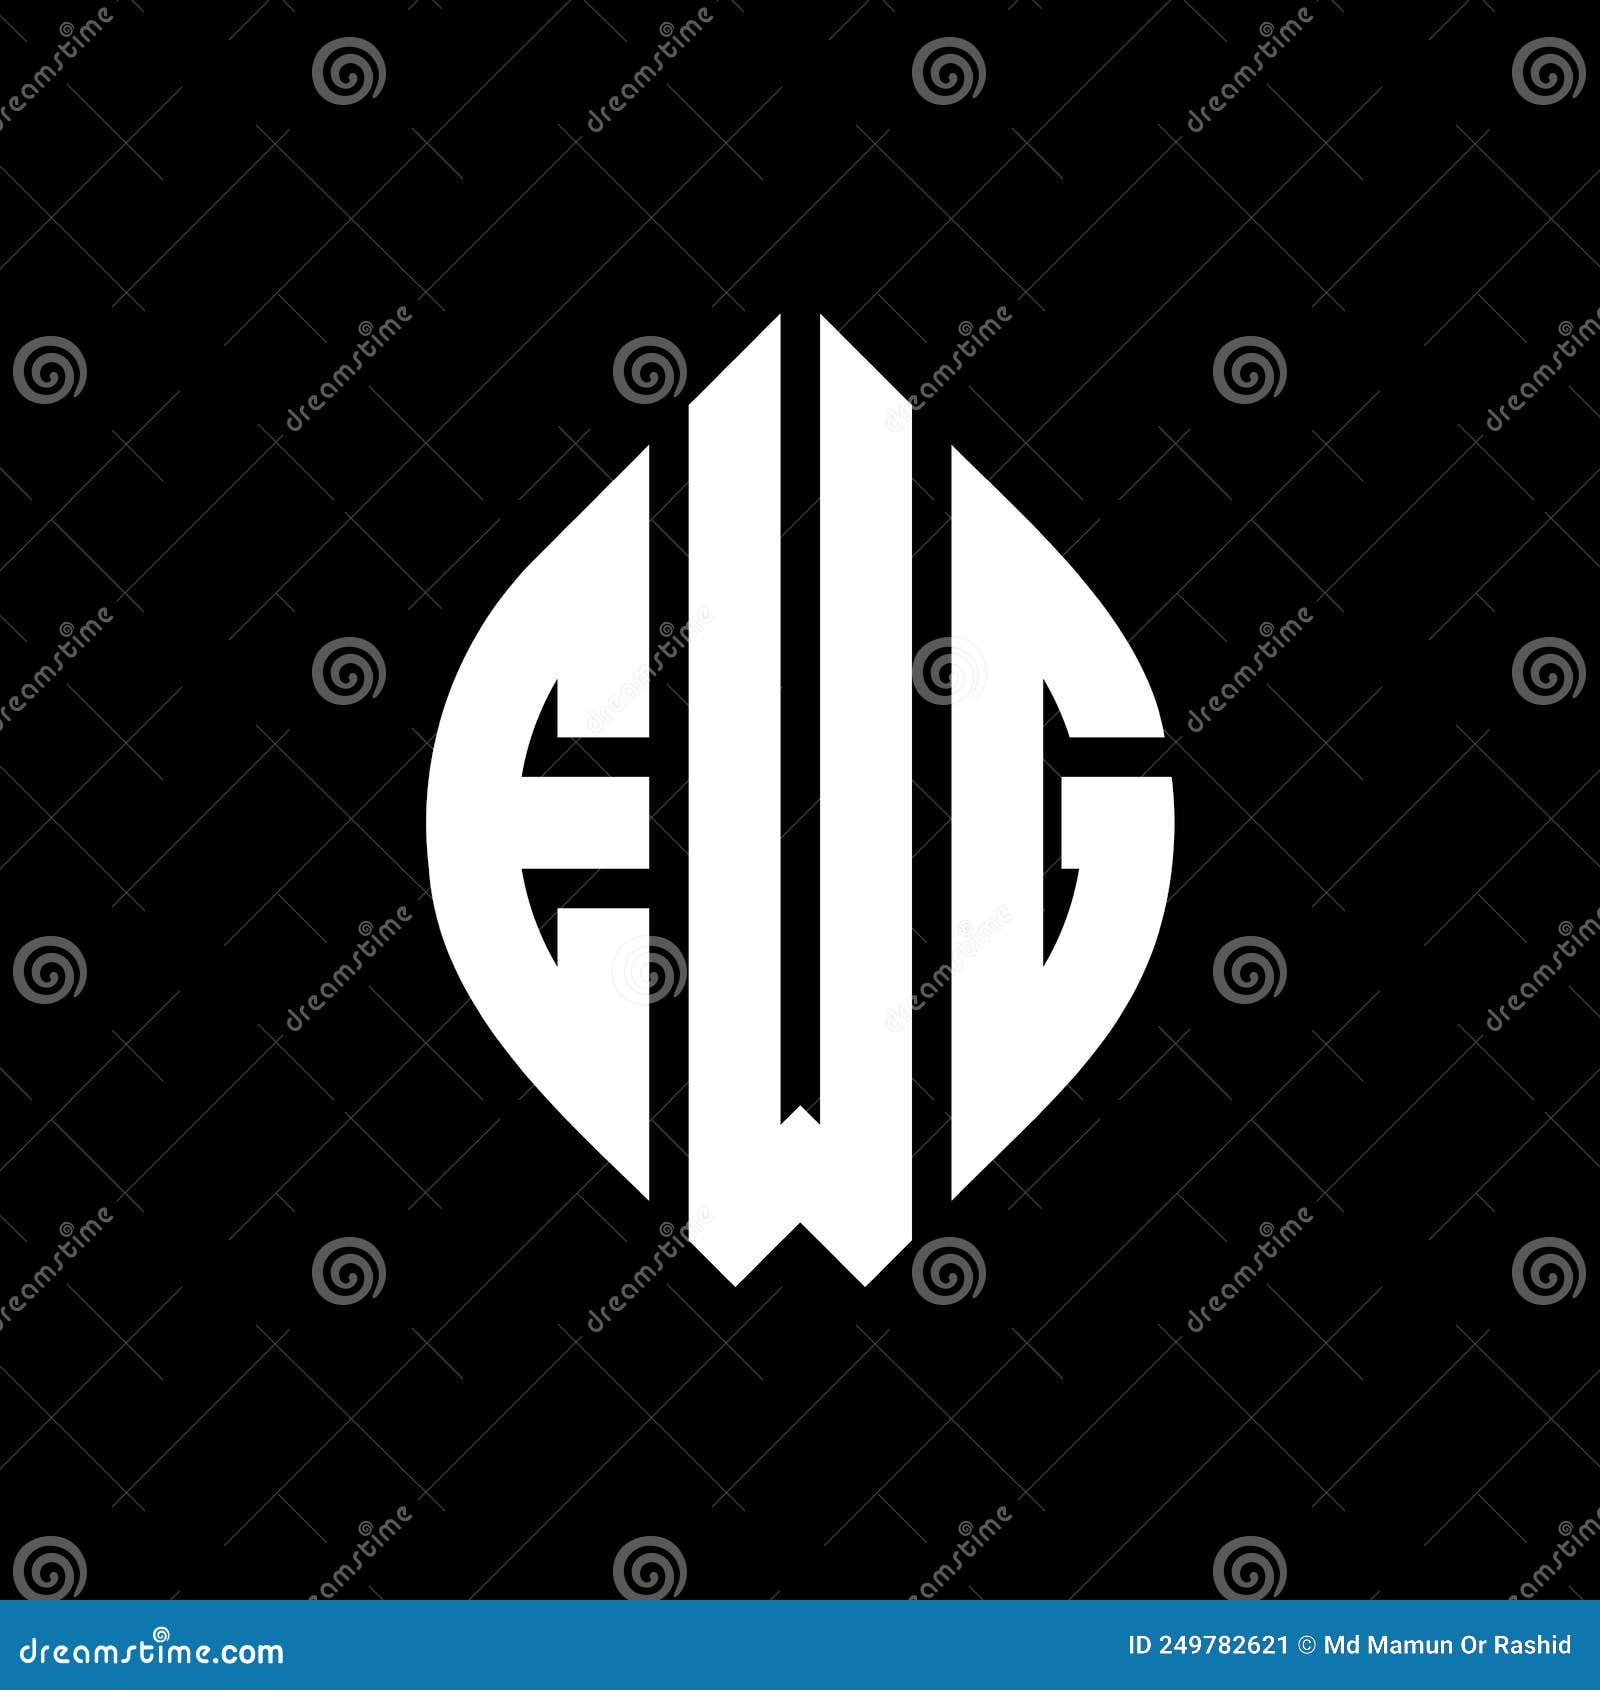 EWG Circle Letter Logo Design with Circle and Ellipse Shape. EWG